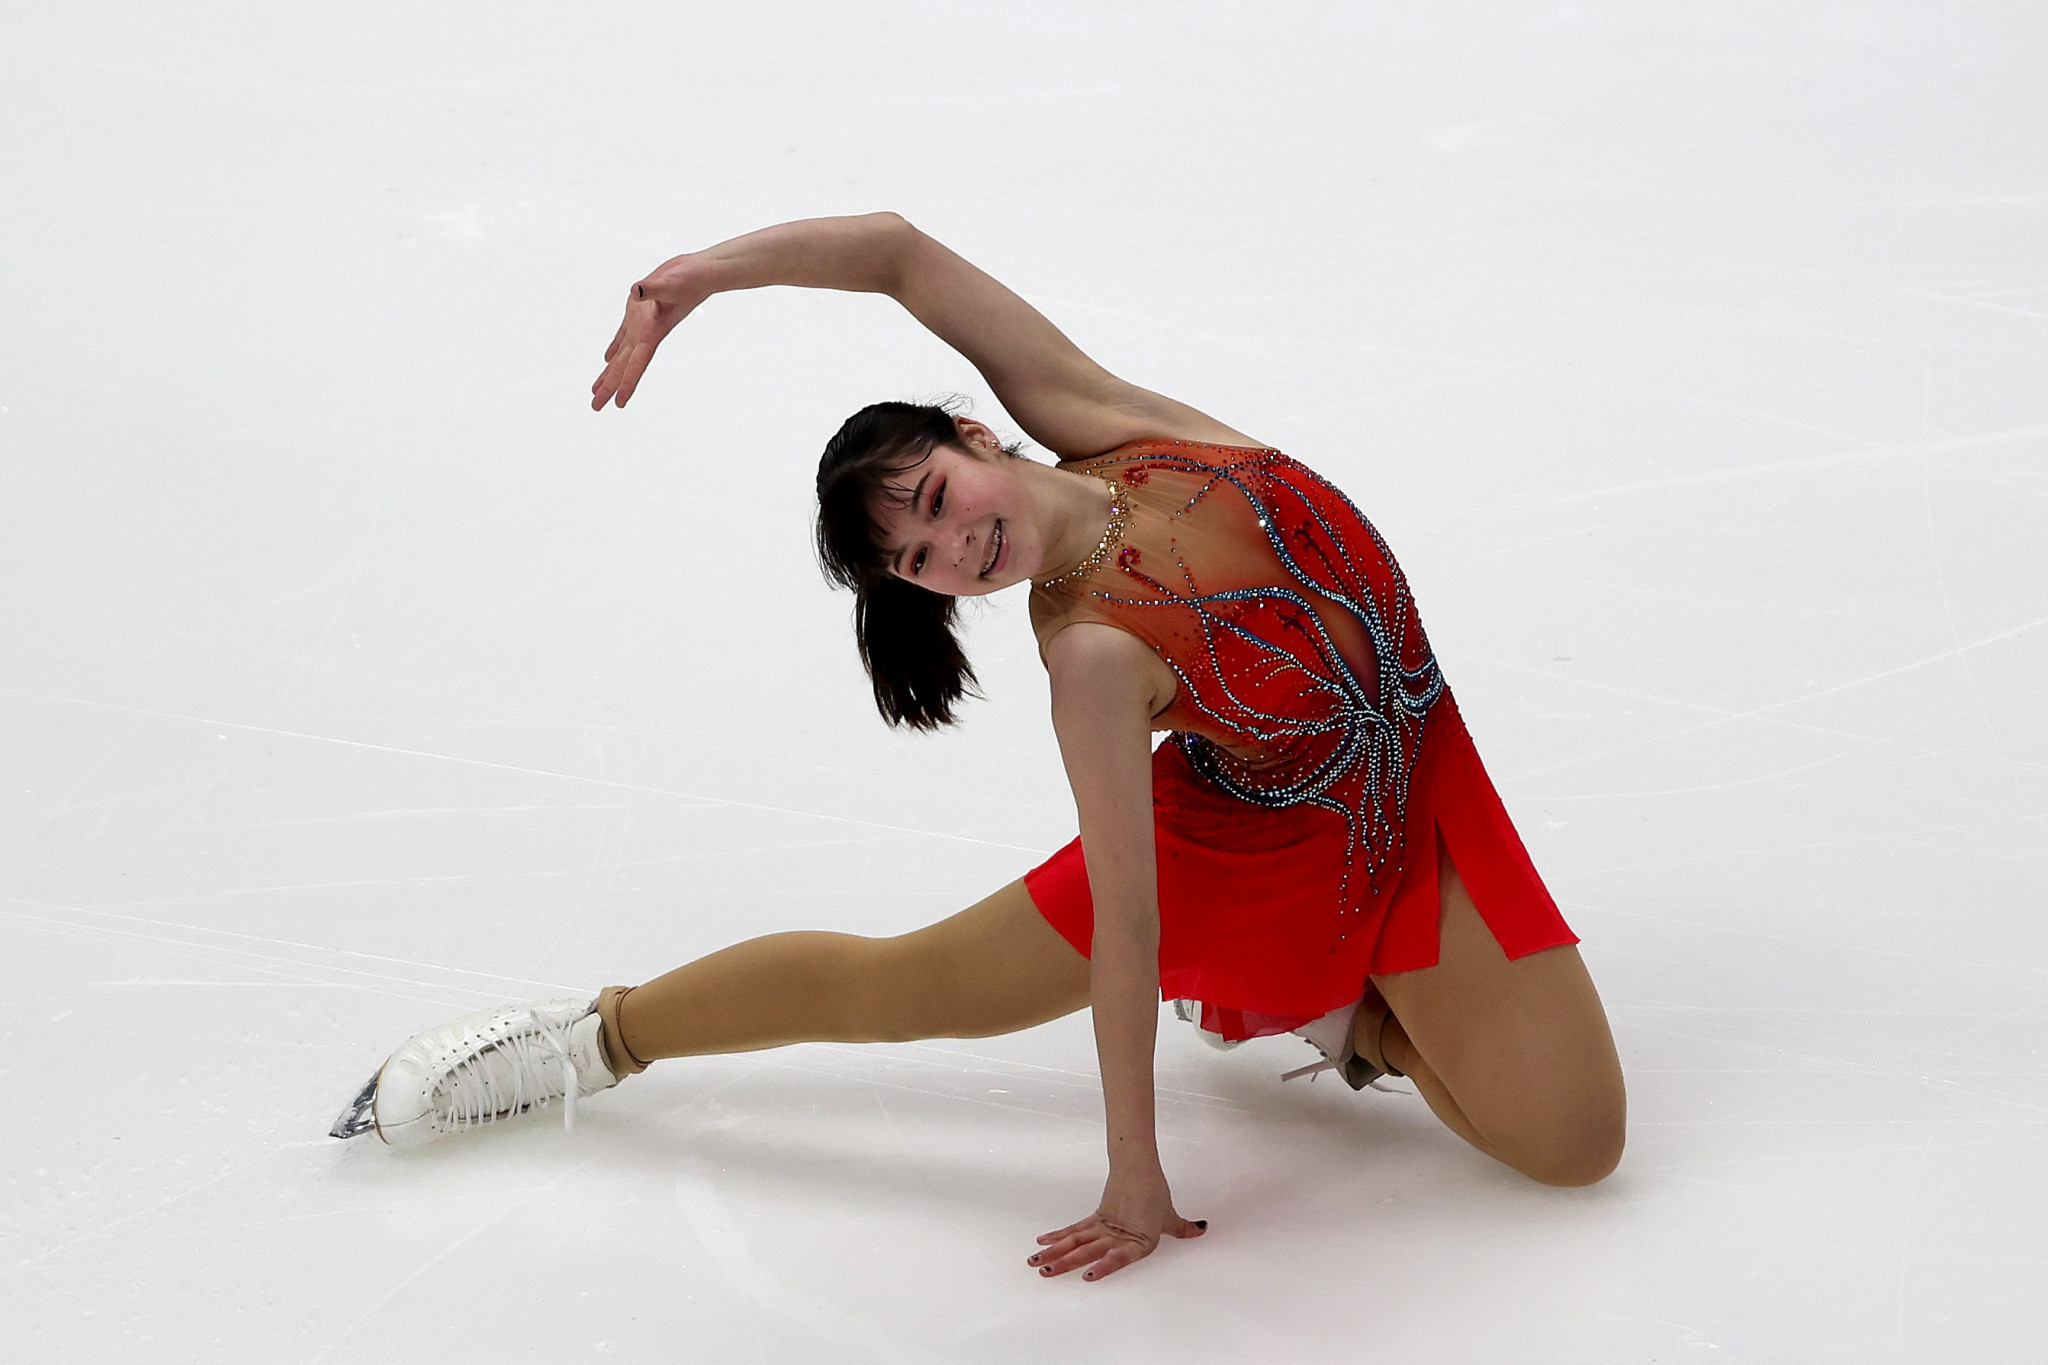 Liu makes US Beijing 2022 figure skating team despite positive COVID-19 test at National Championships